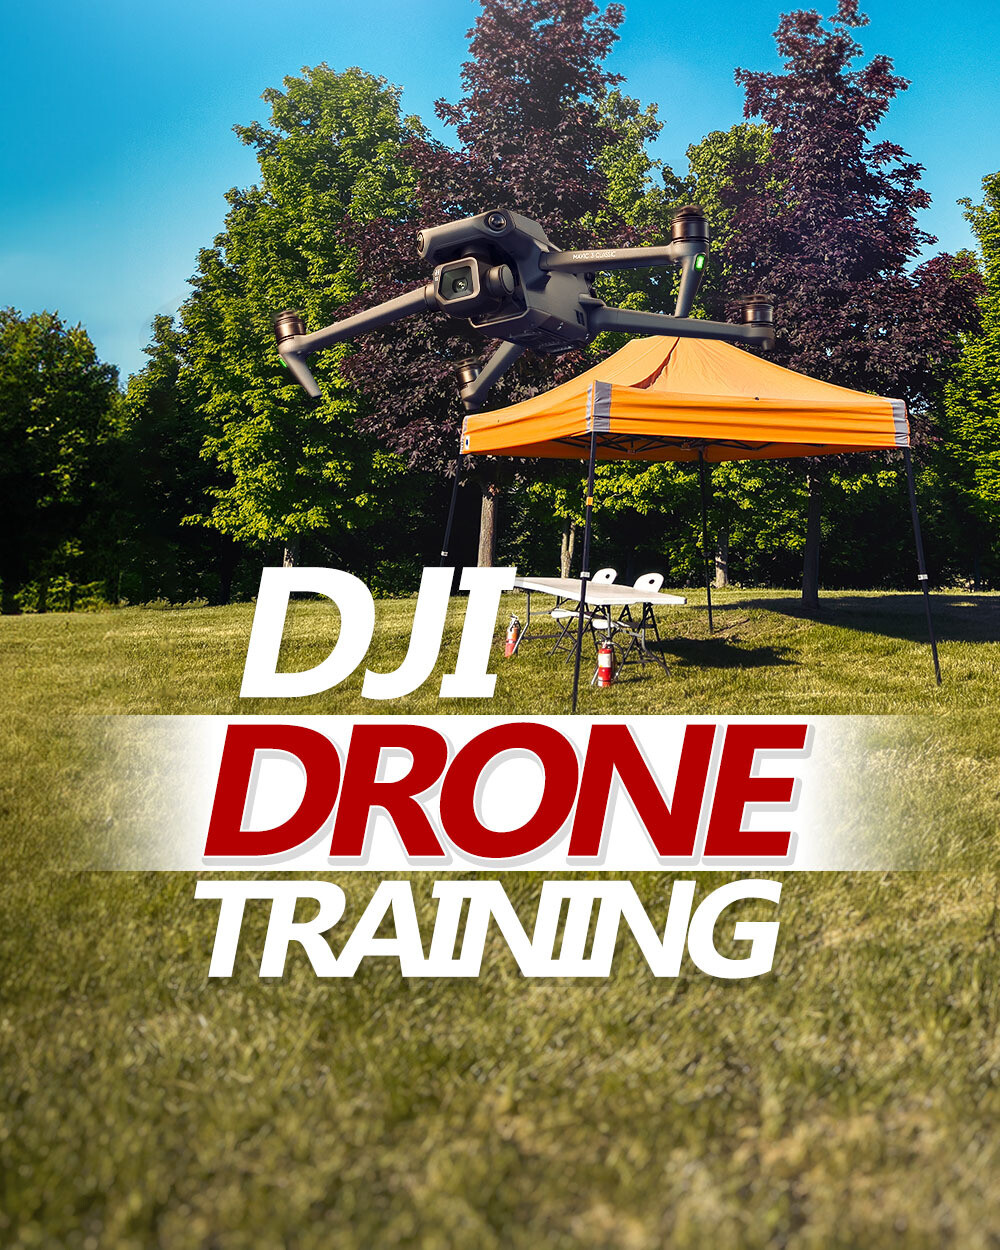 DJI Drone Equipment Training